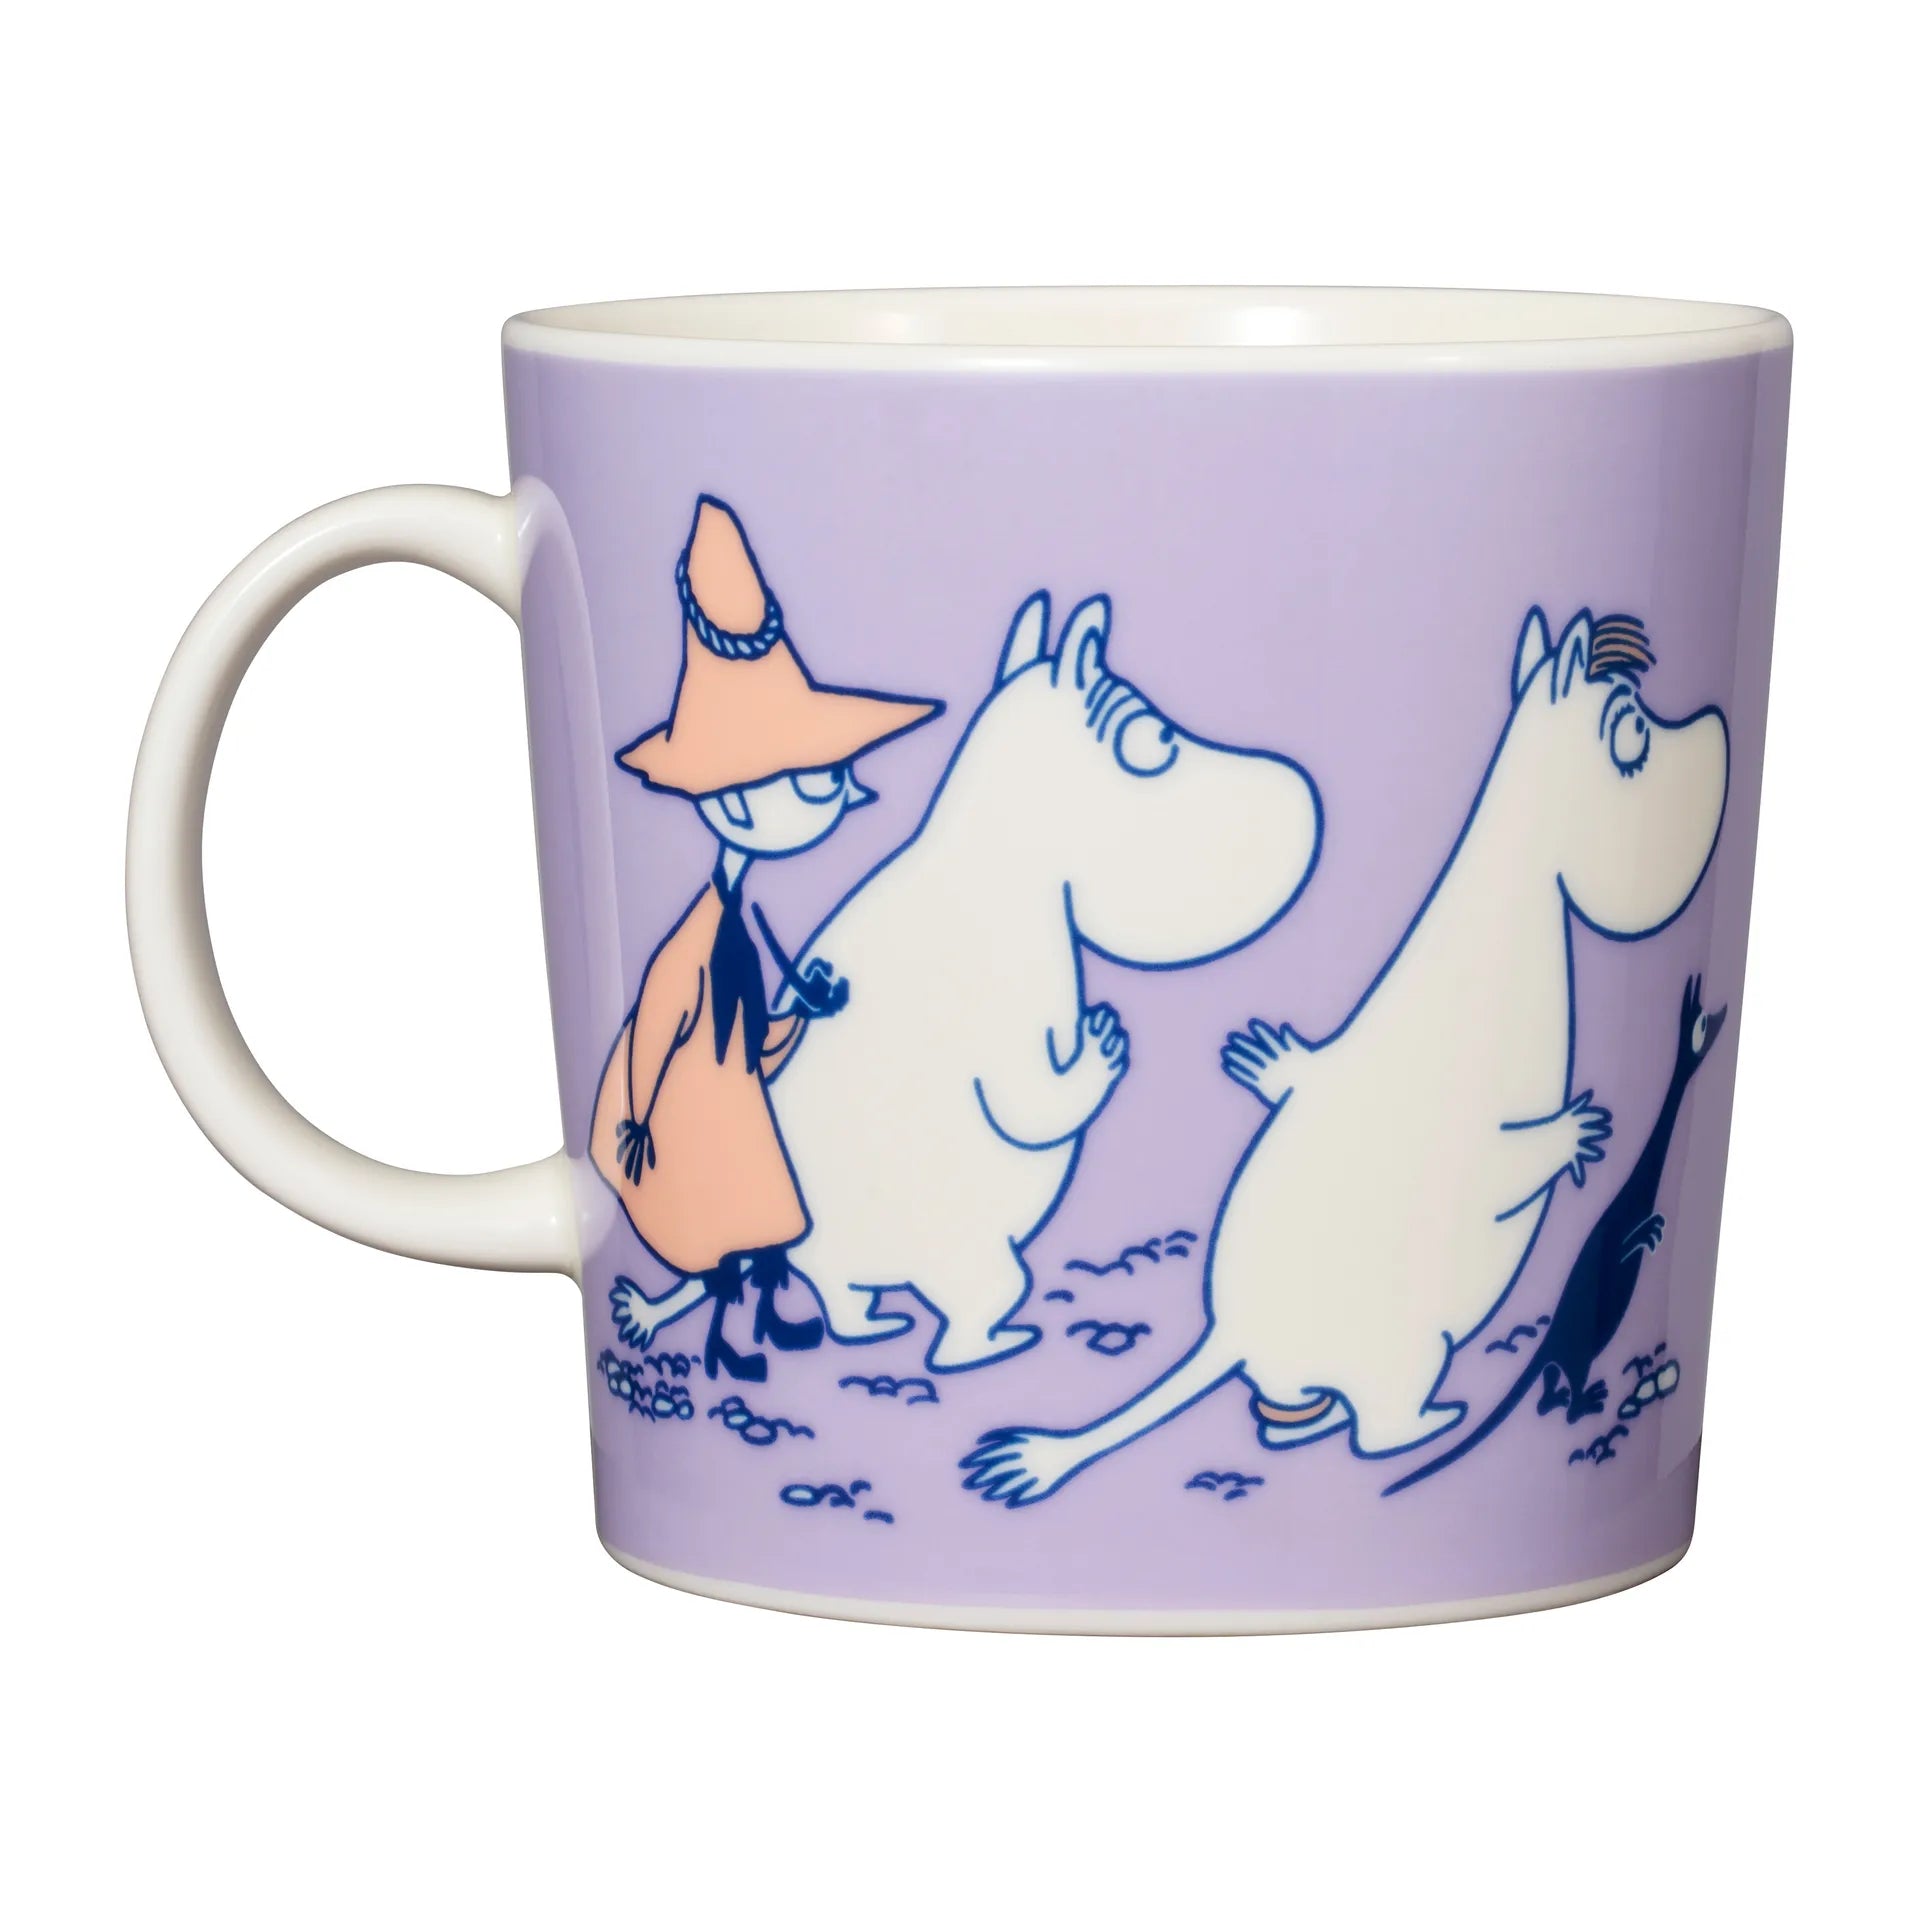 Moomin mug special LARGE 400ml ABC Moomin mug 40 cl L